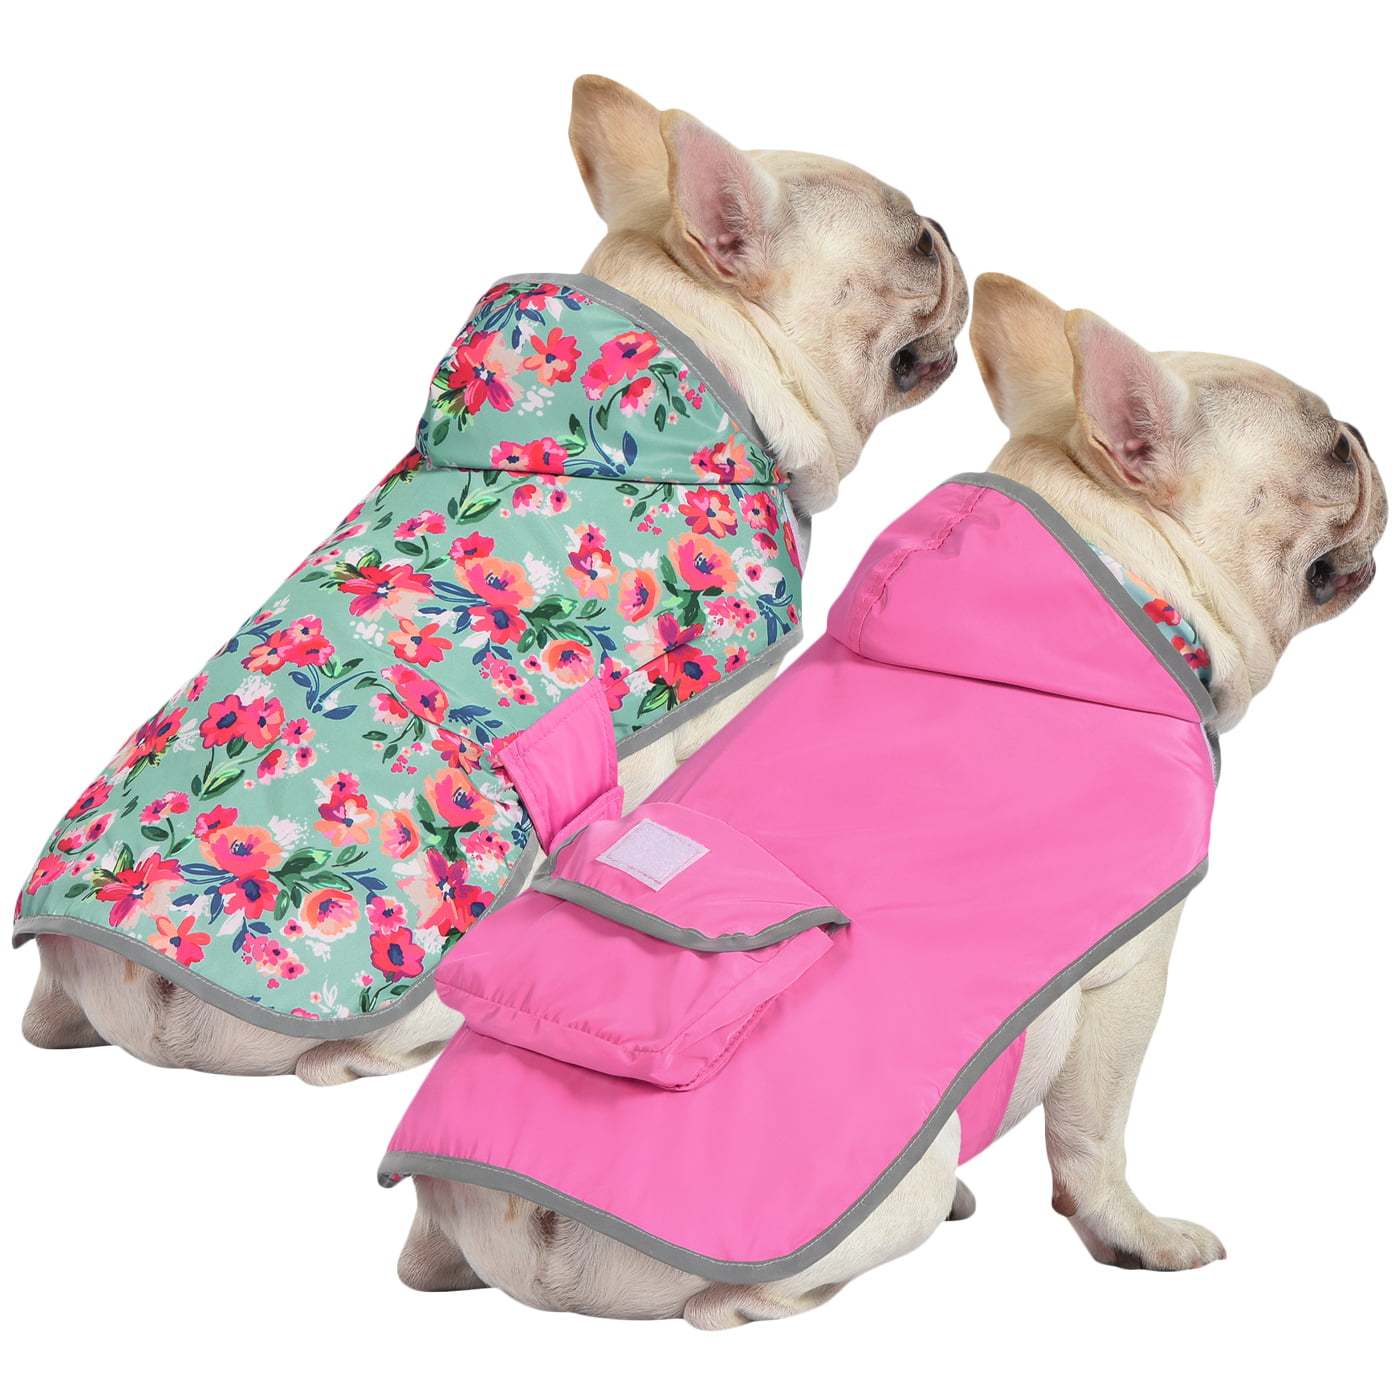 Idepet Dog Raincoat Waterproof Hoodie Jacket Rain Poncho Pet Rainwear Clothes with Reflective Stripe for Small Medium Large Dogs 